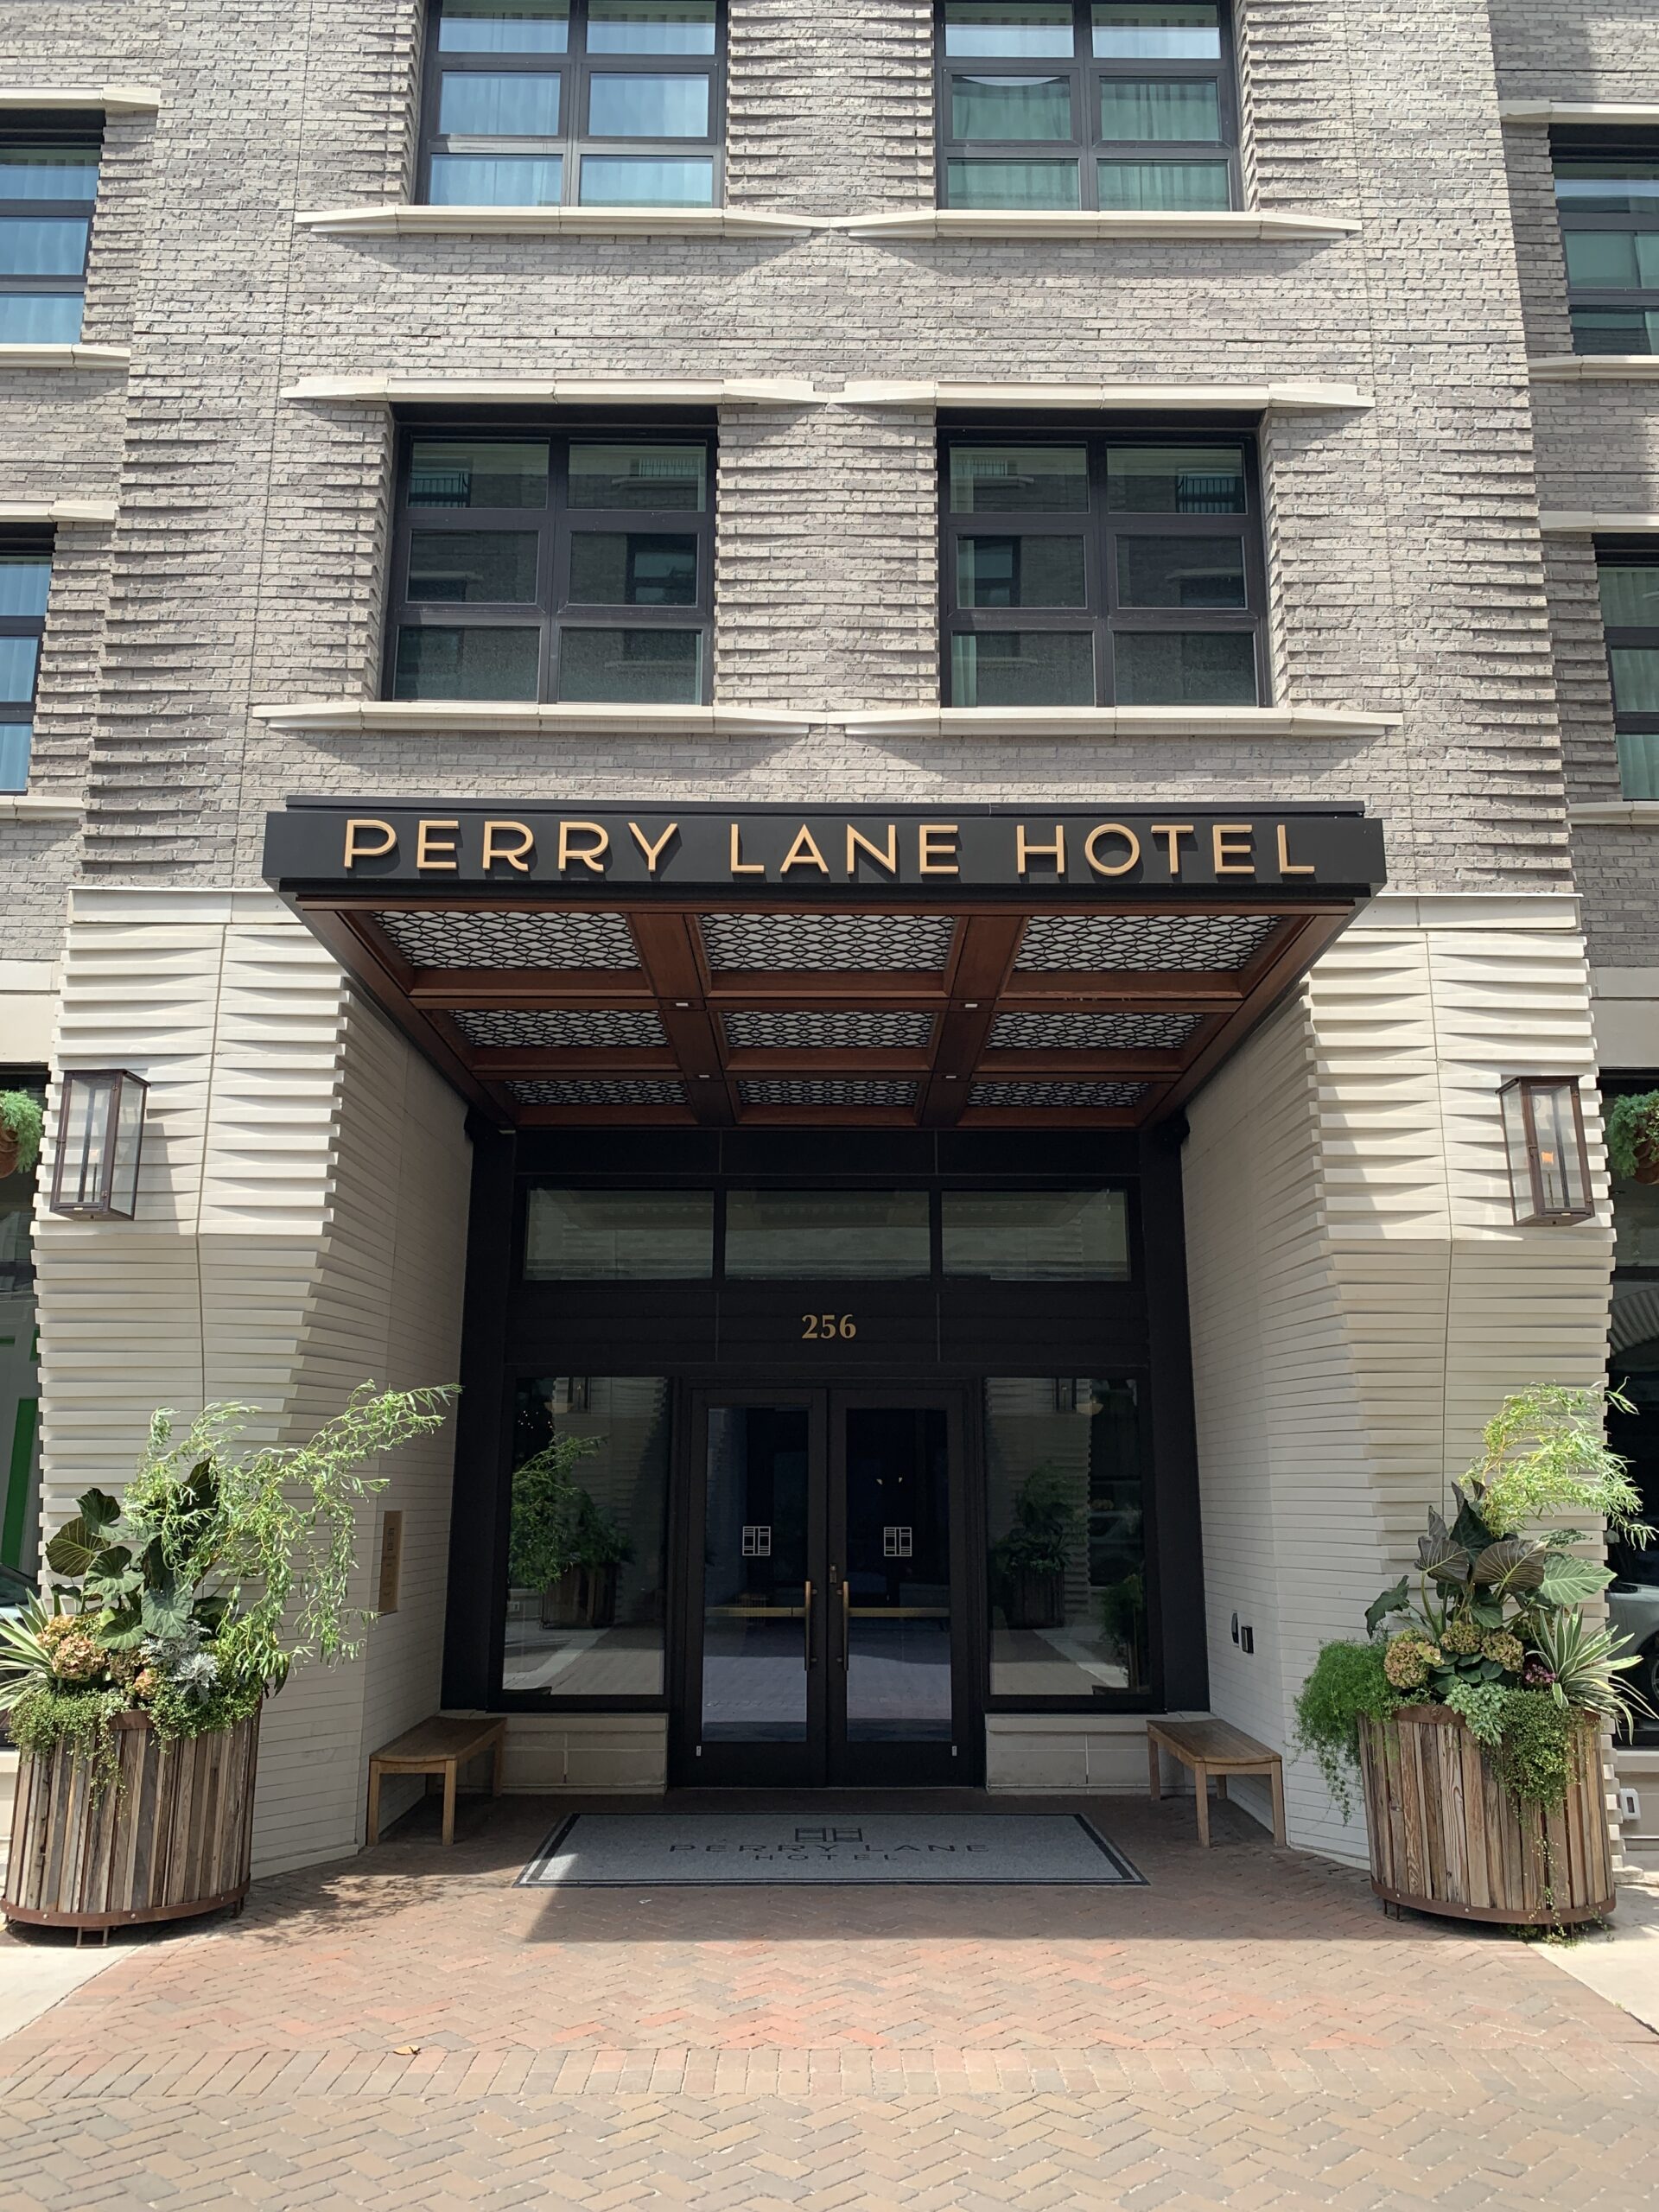 Visiting Savannah Georgia – A Stay at the Perry Lane Hotel